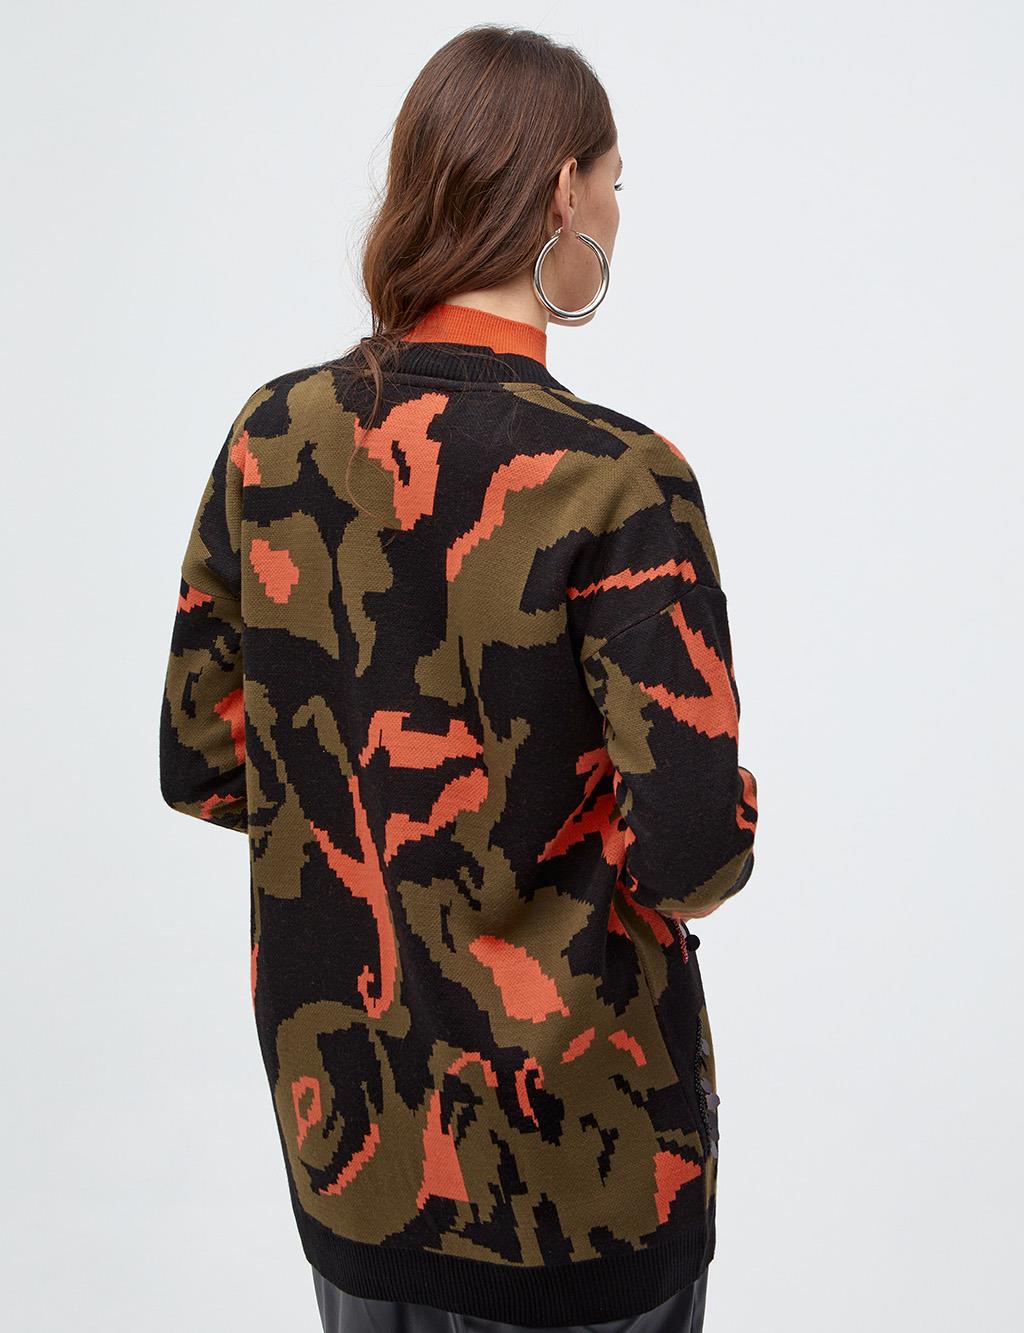 Camouflage Patterned Knitwear Cardigan Black